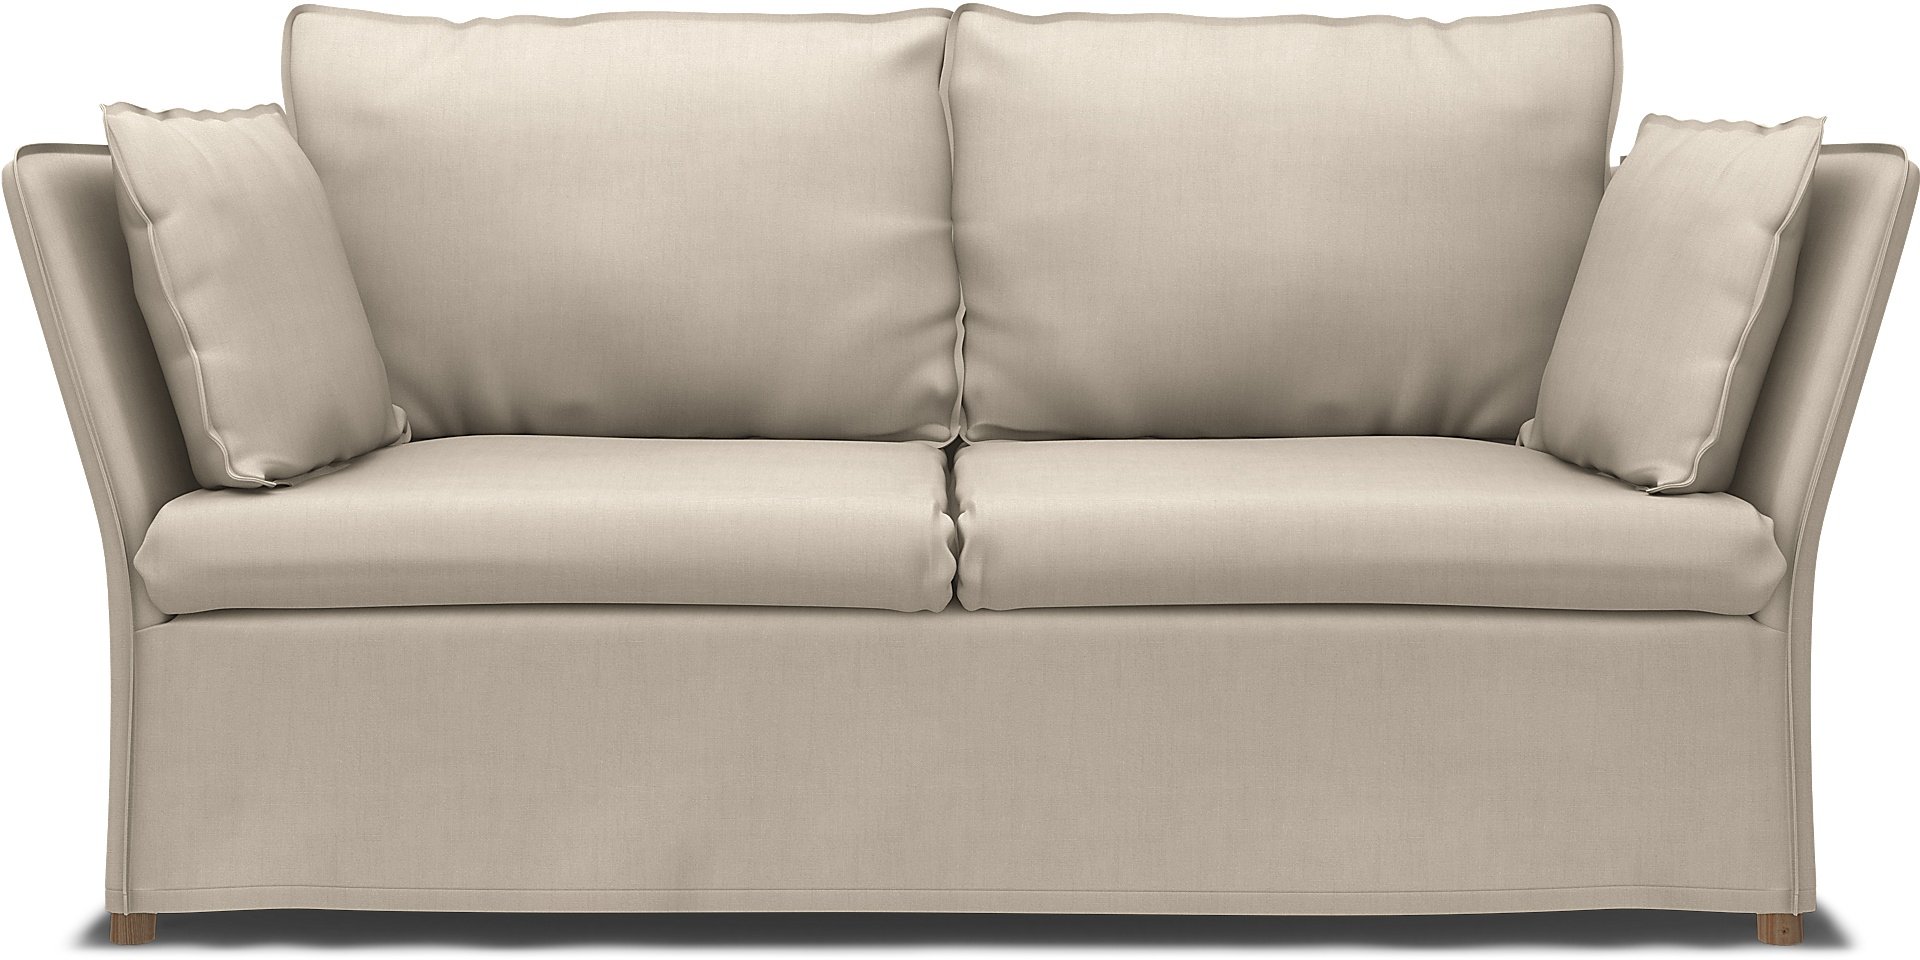 IKEA - Backsalen 2 seater sofa, Parchment, Linen - Bemz